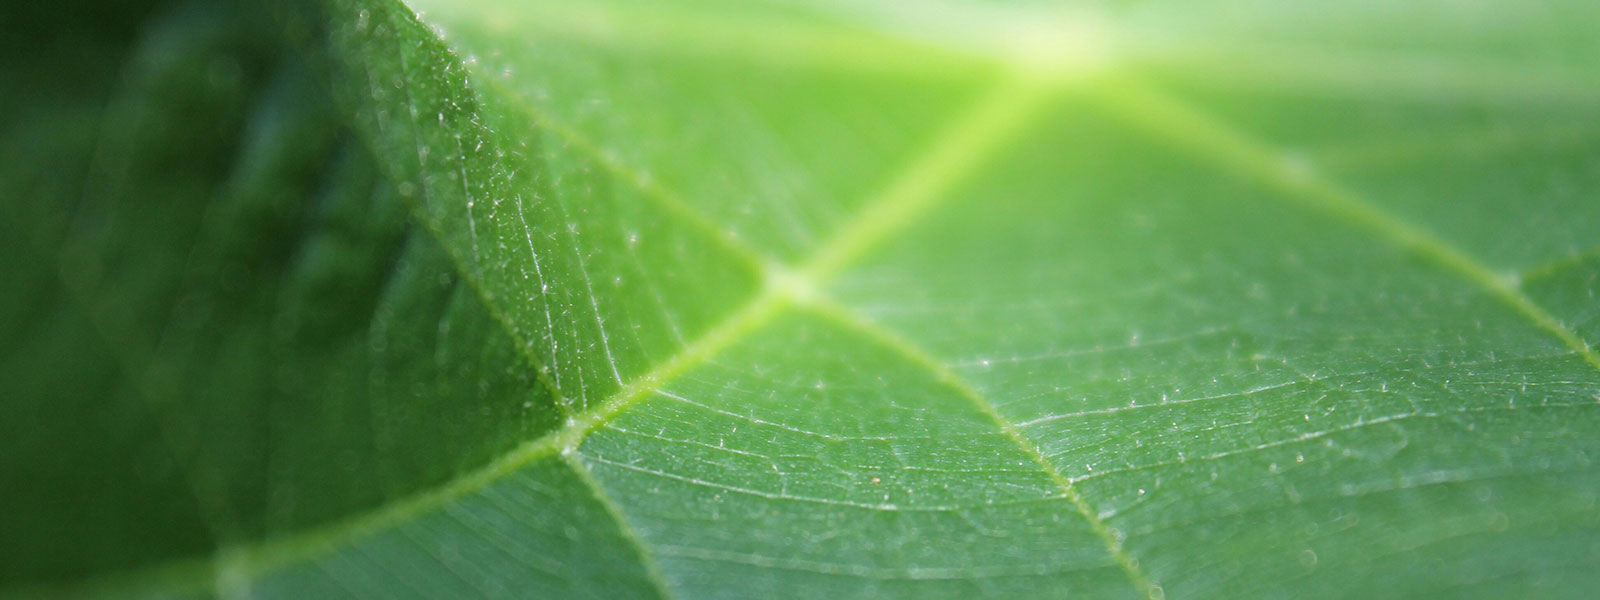 leaf up close